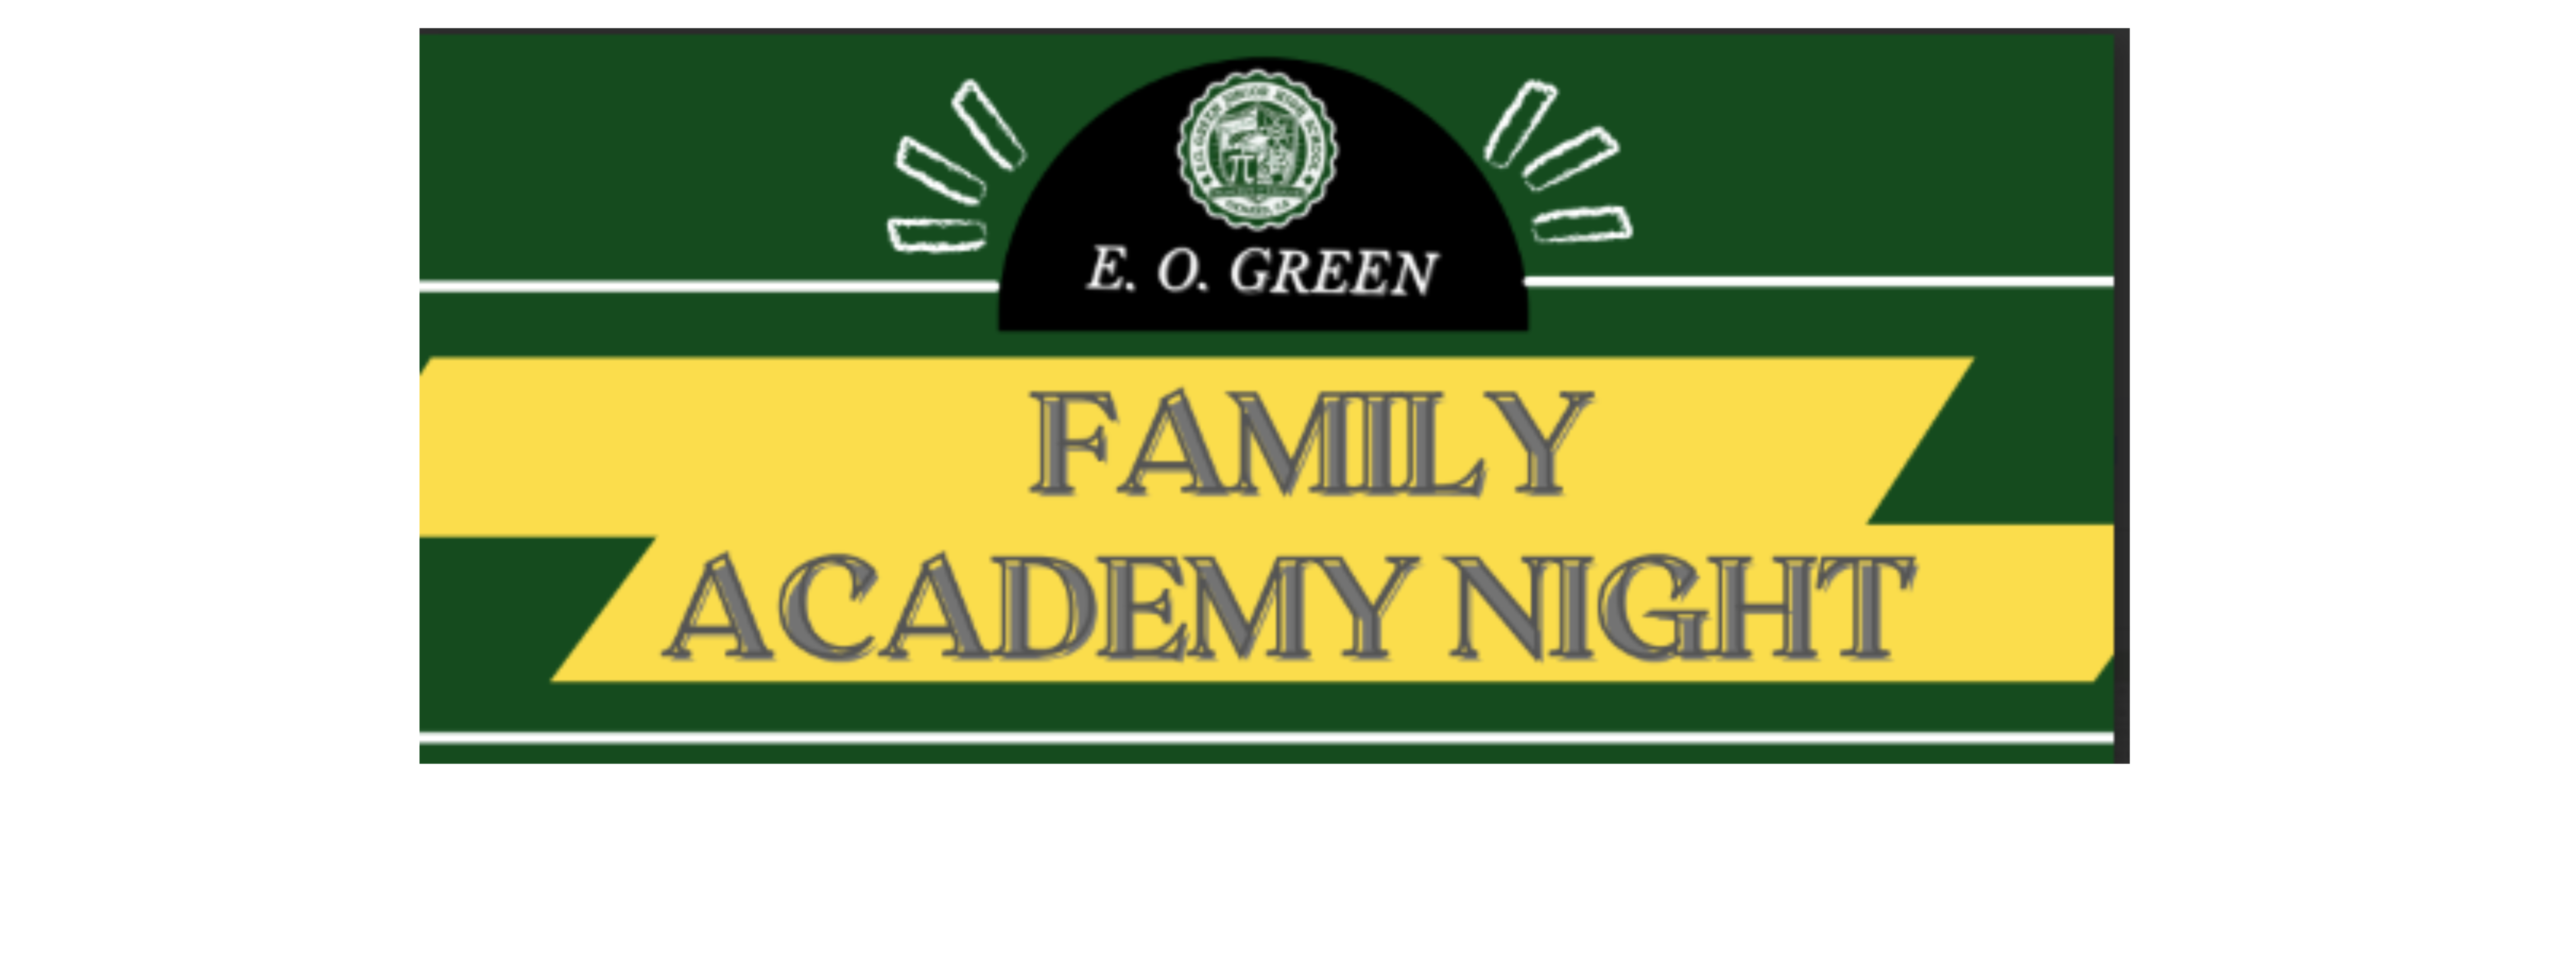 Family Academy Night